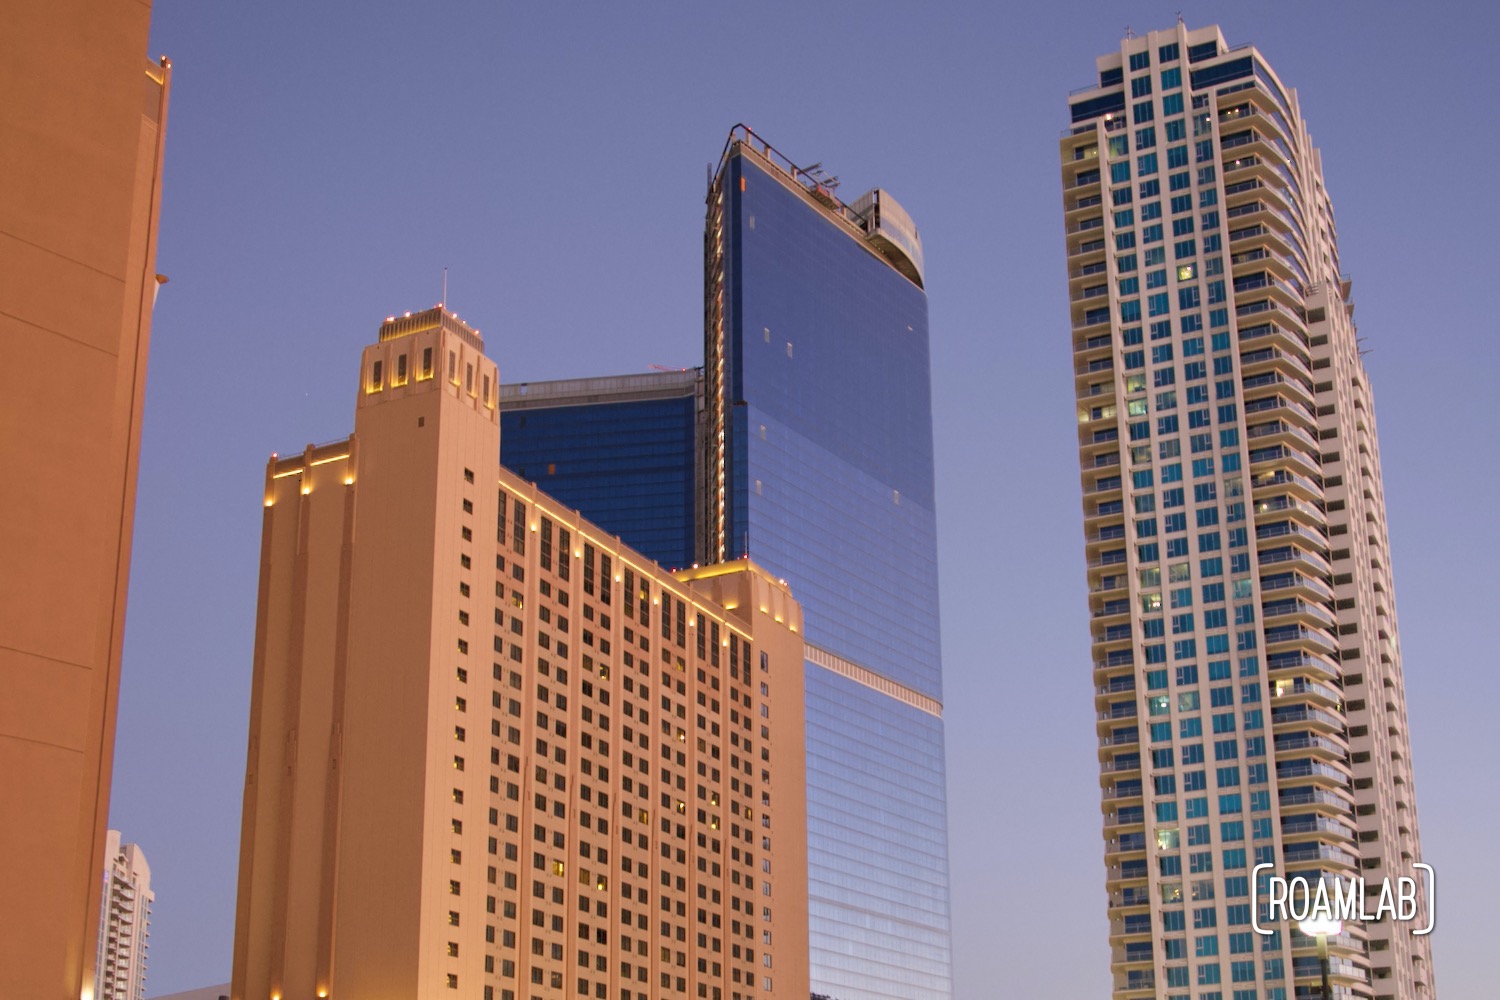 Tall buildings in the evening light of Las Vegas, Nevada.